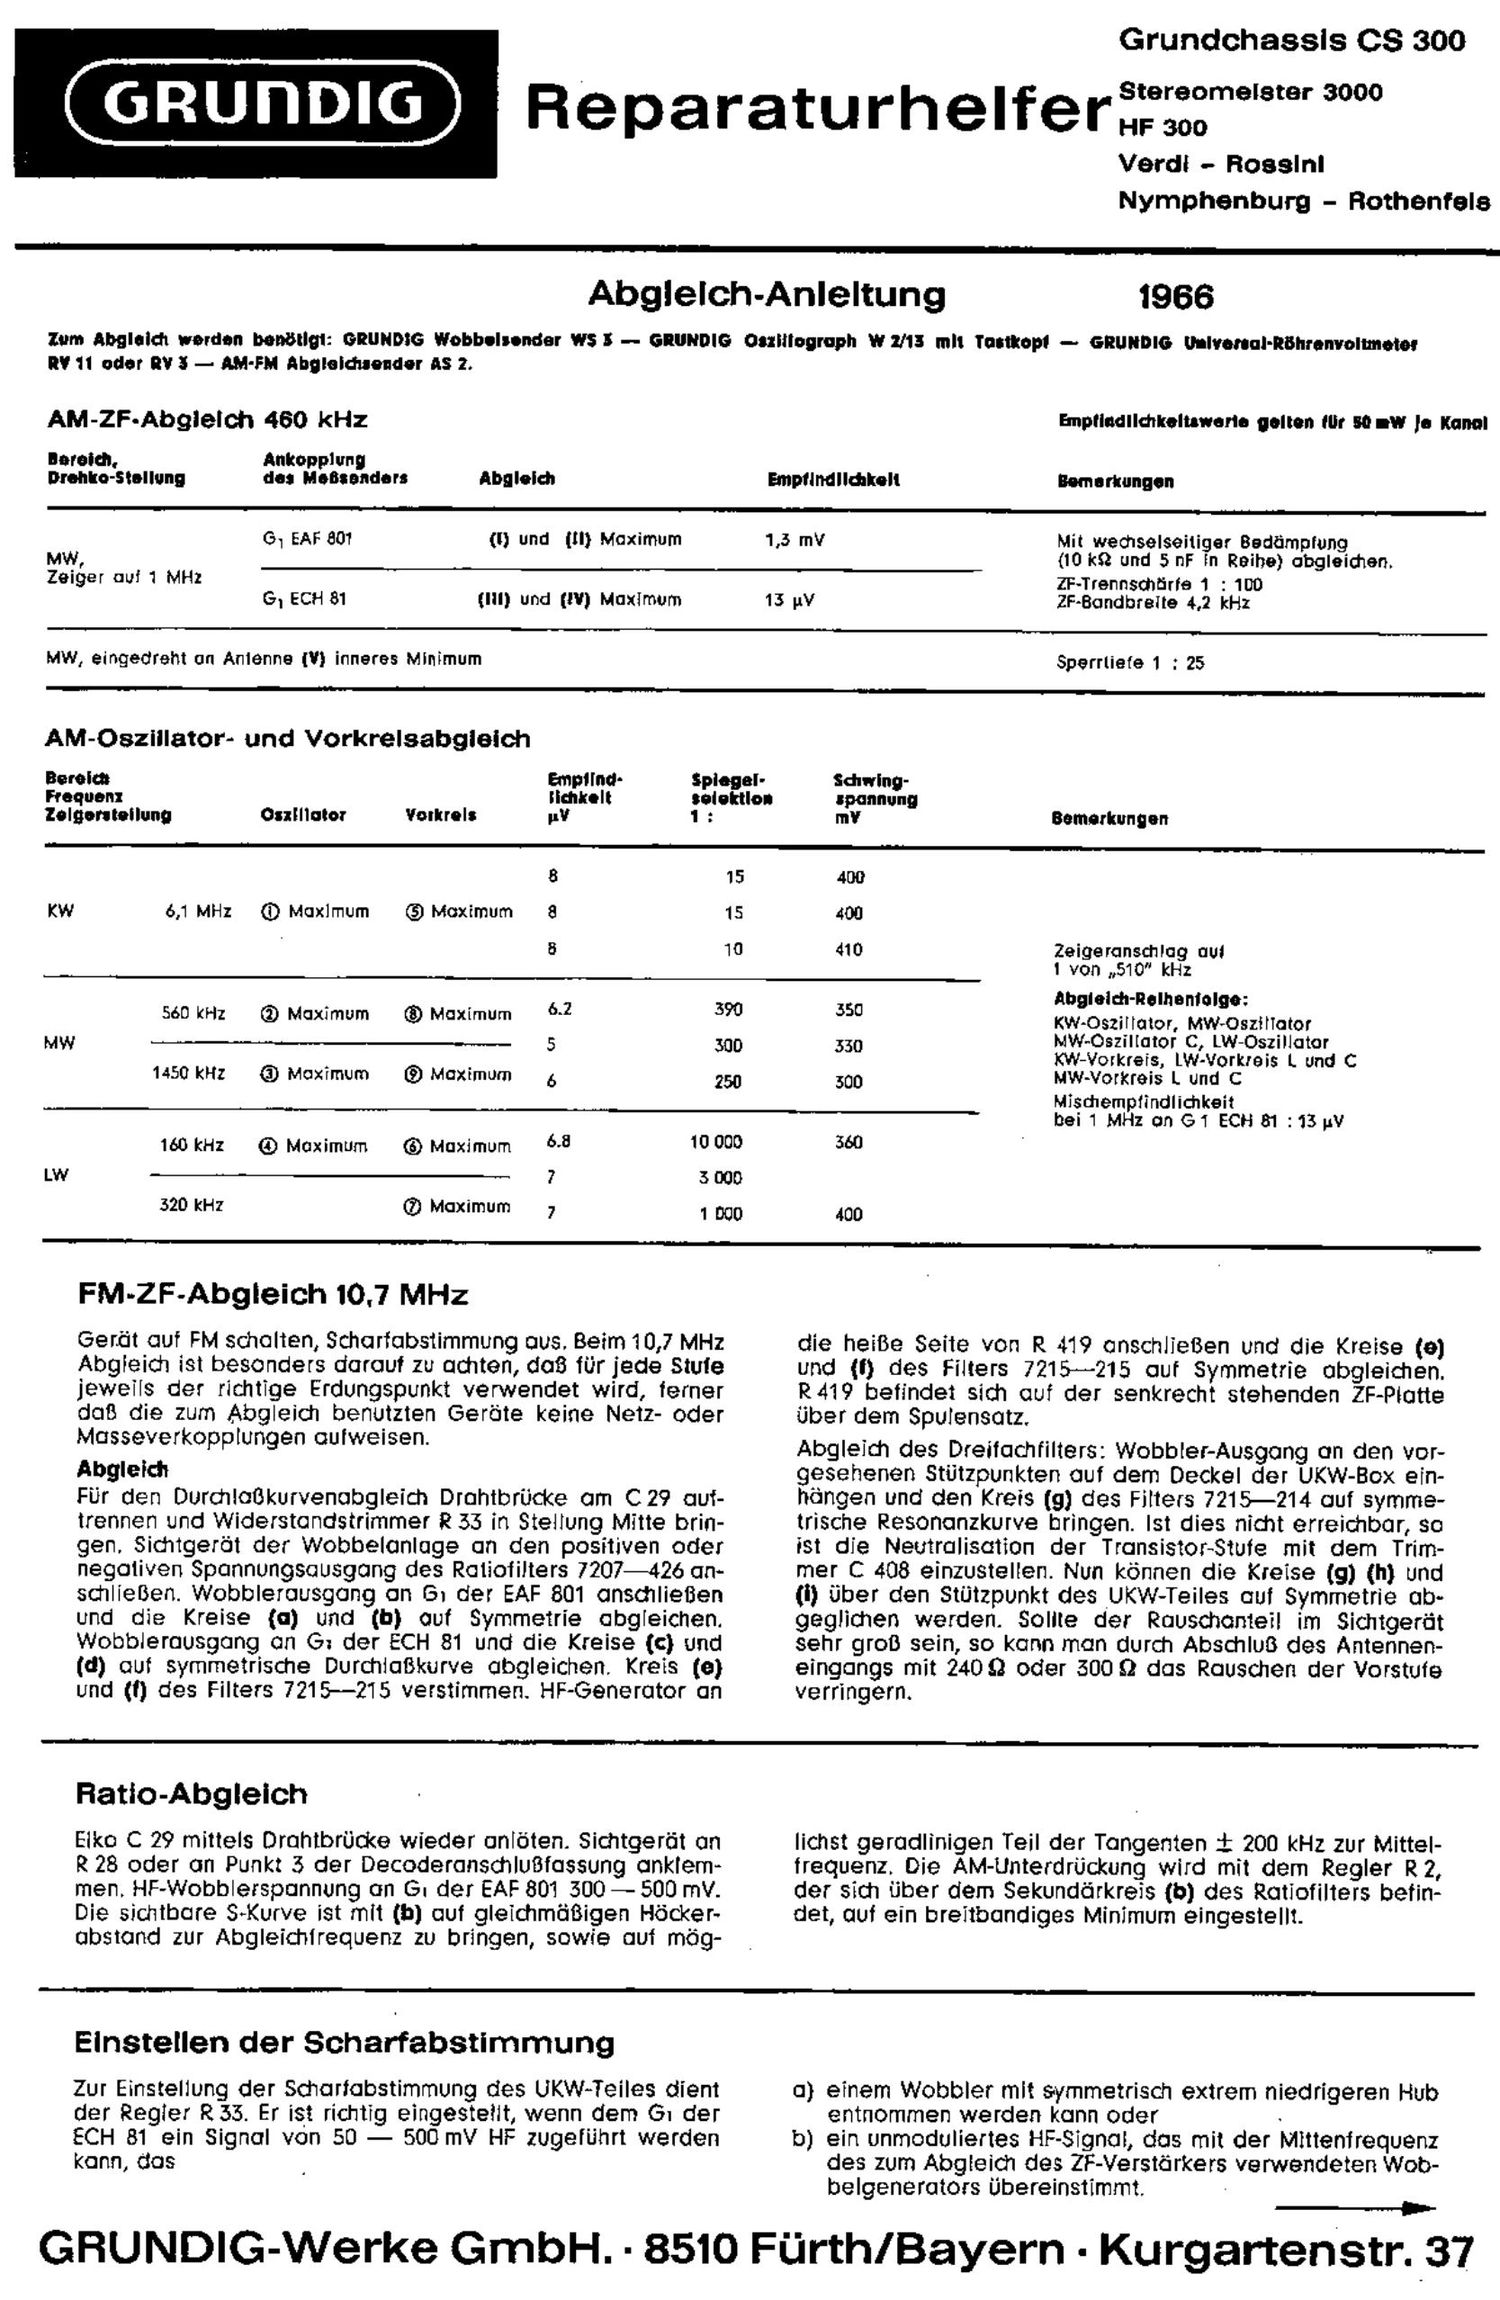 Grundig HF 300 Service Manual